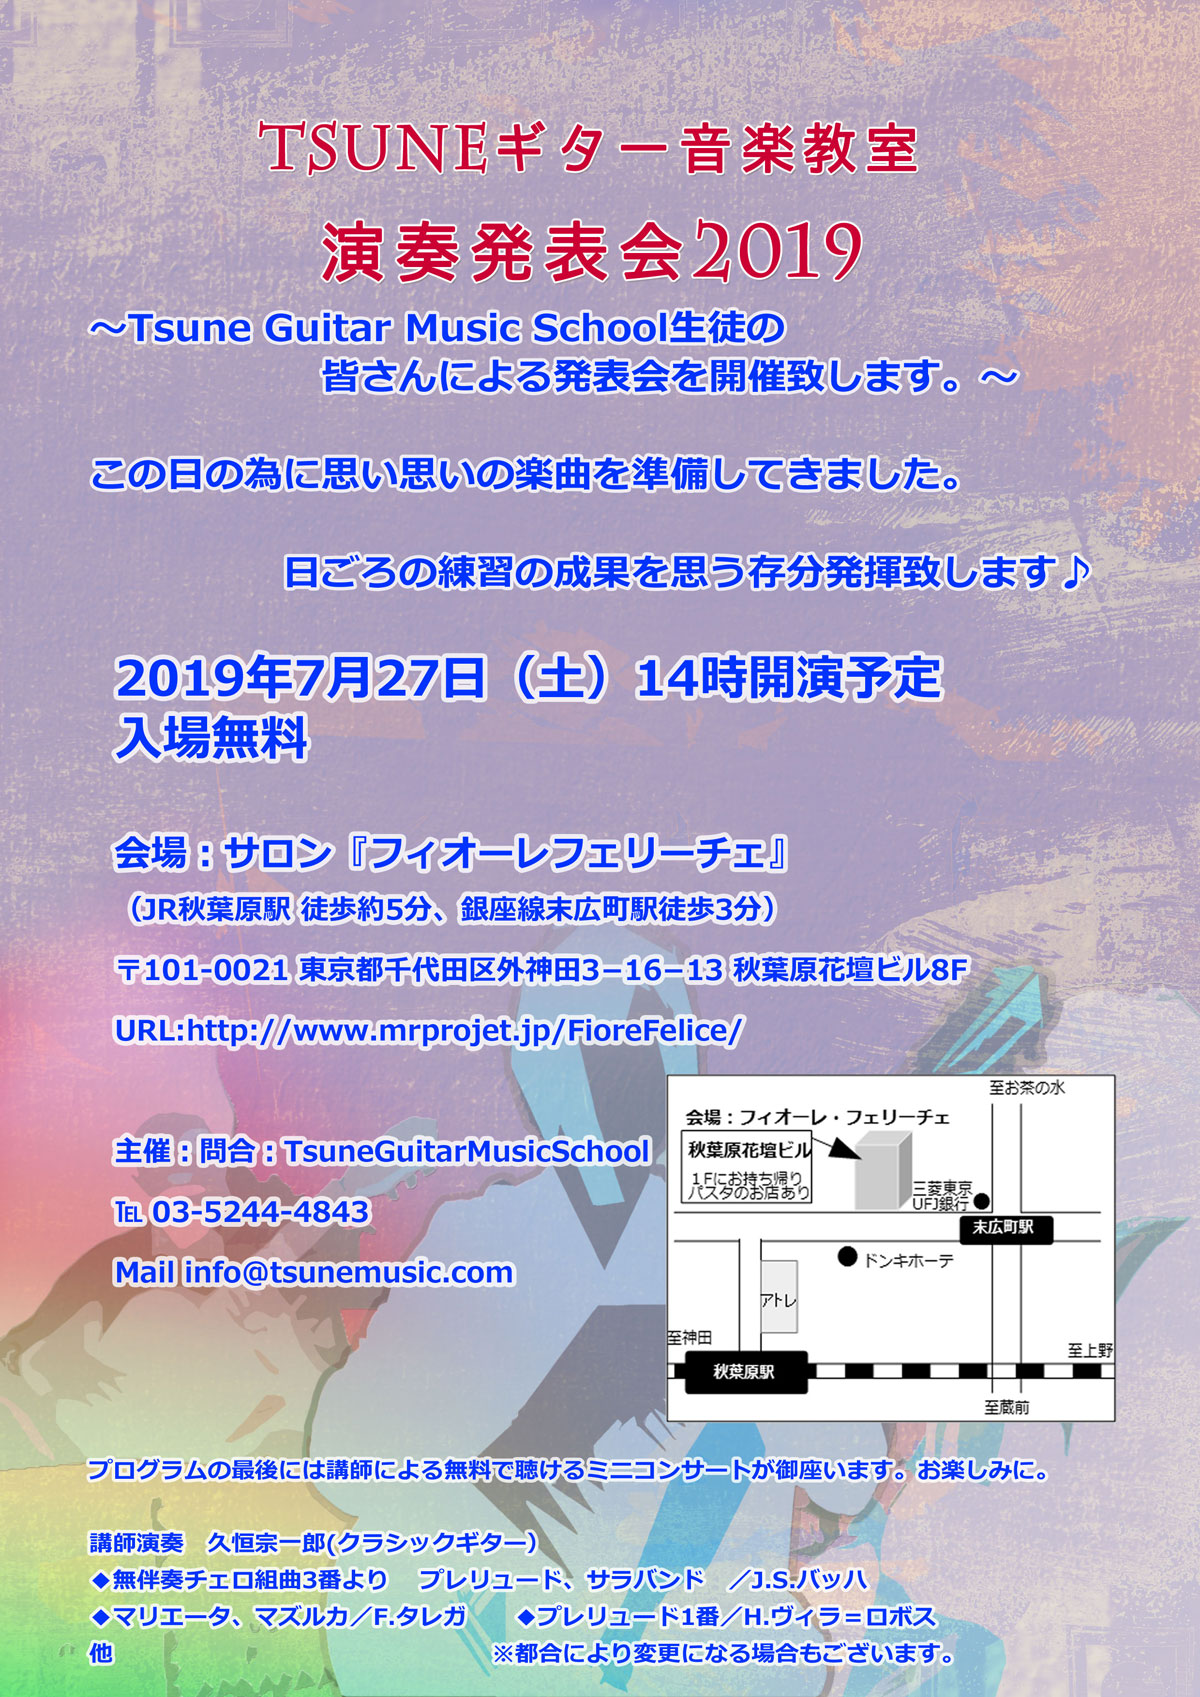 Tsuneギター音楽教室夏の発表会2019ポスター